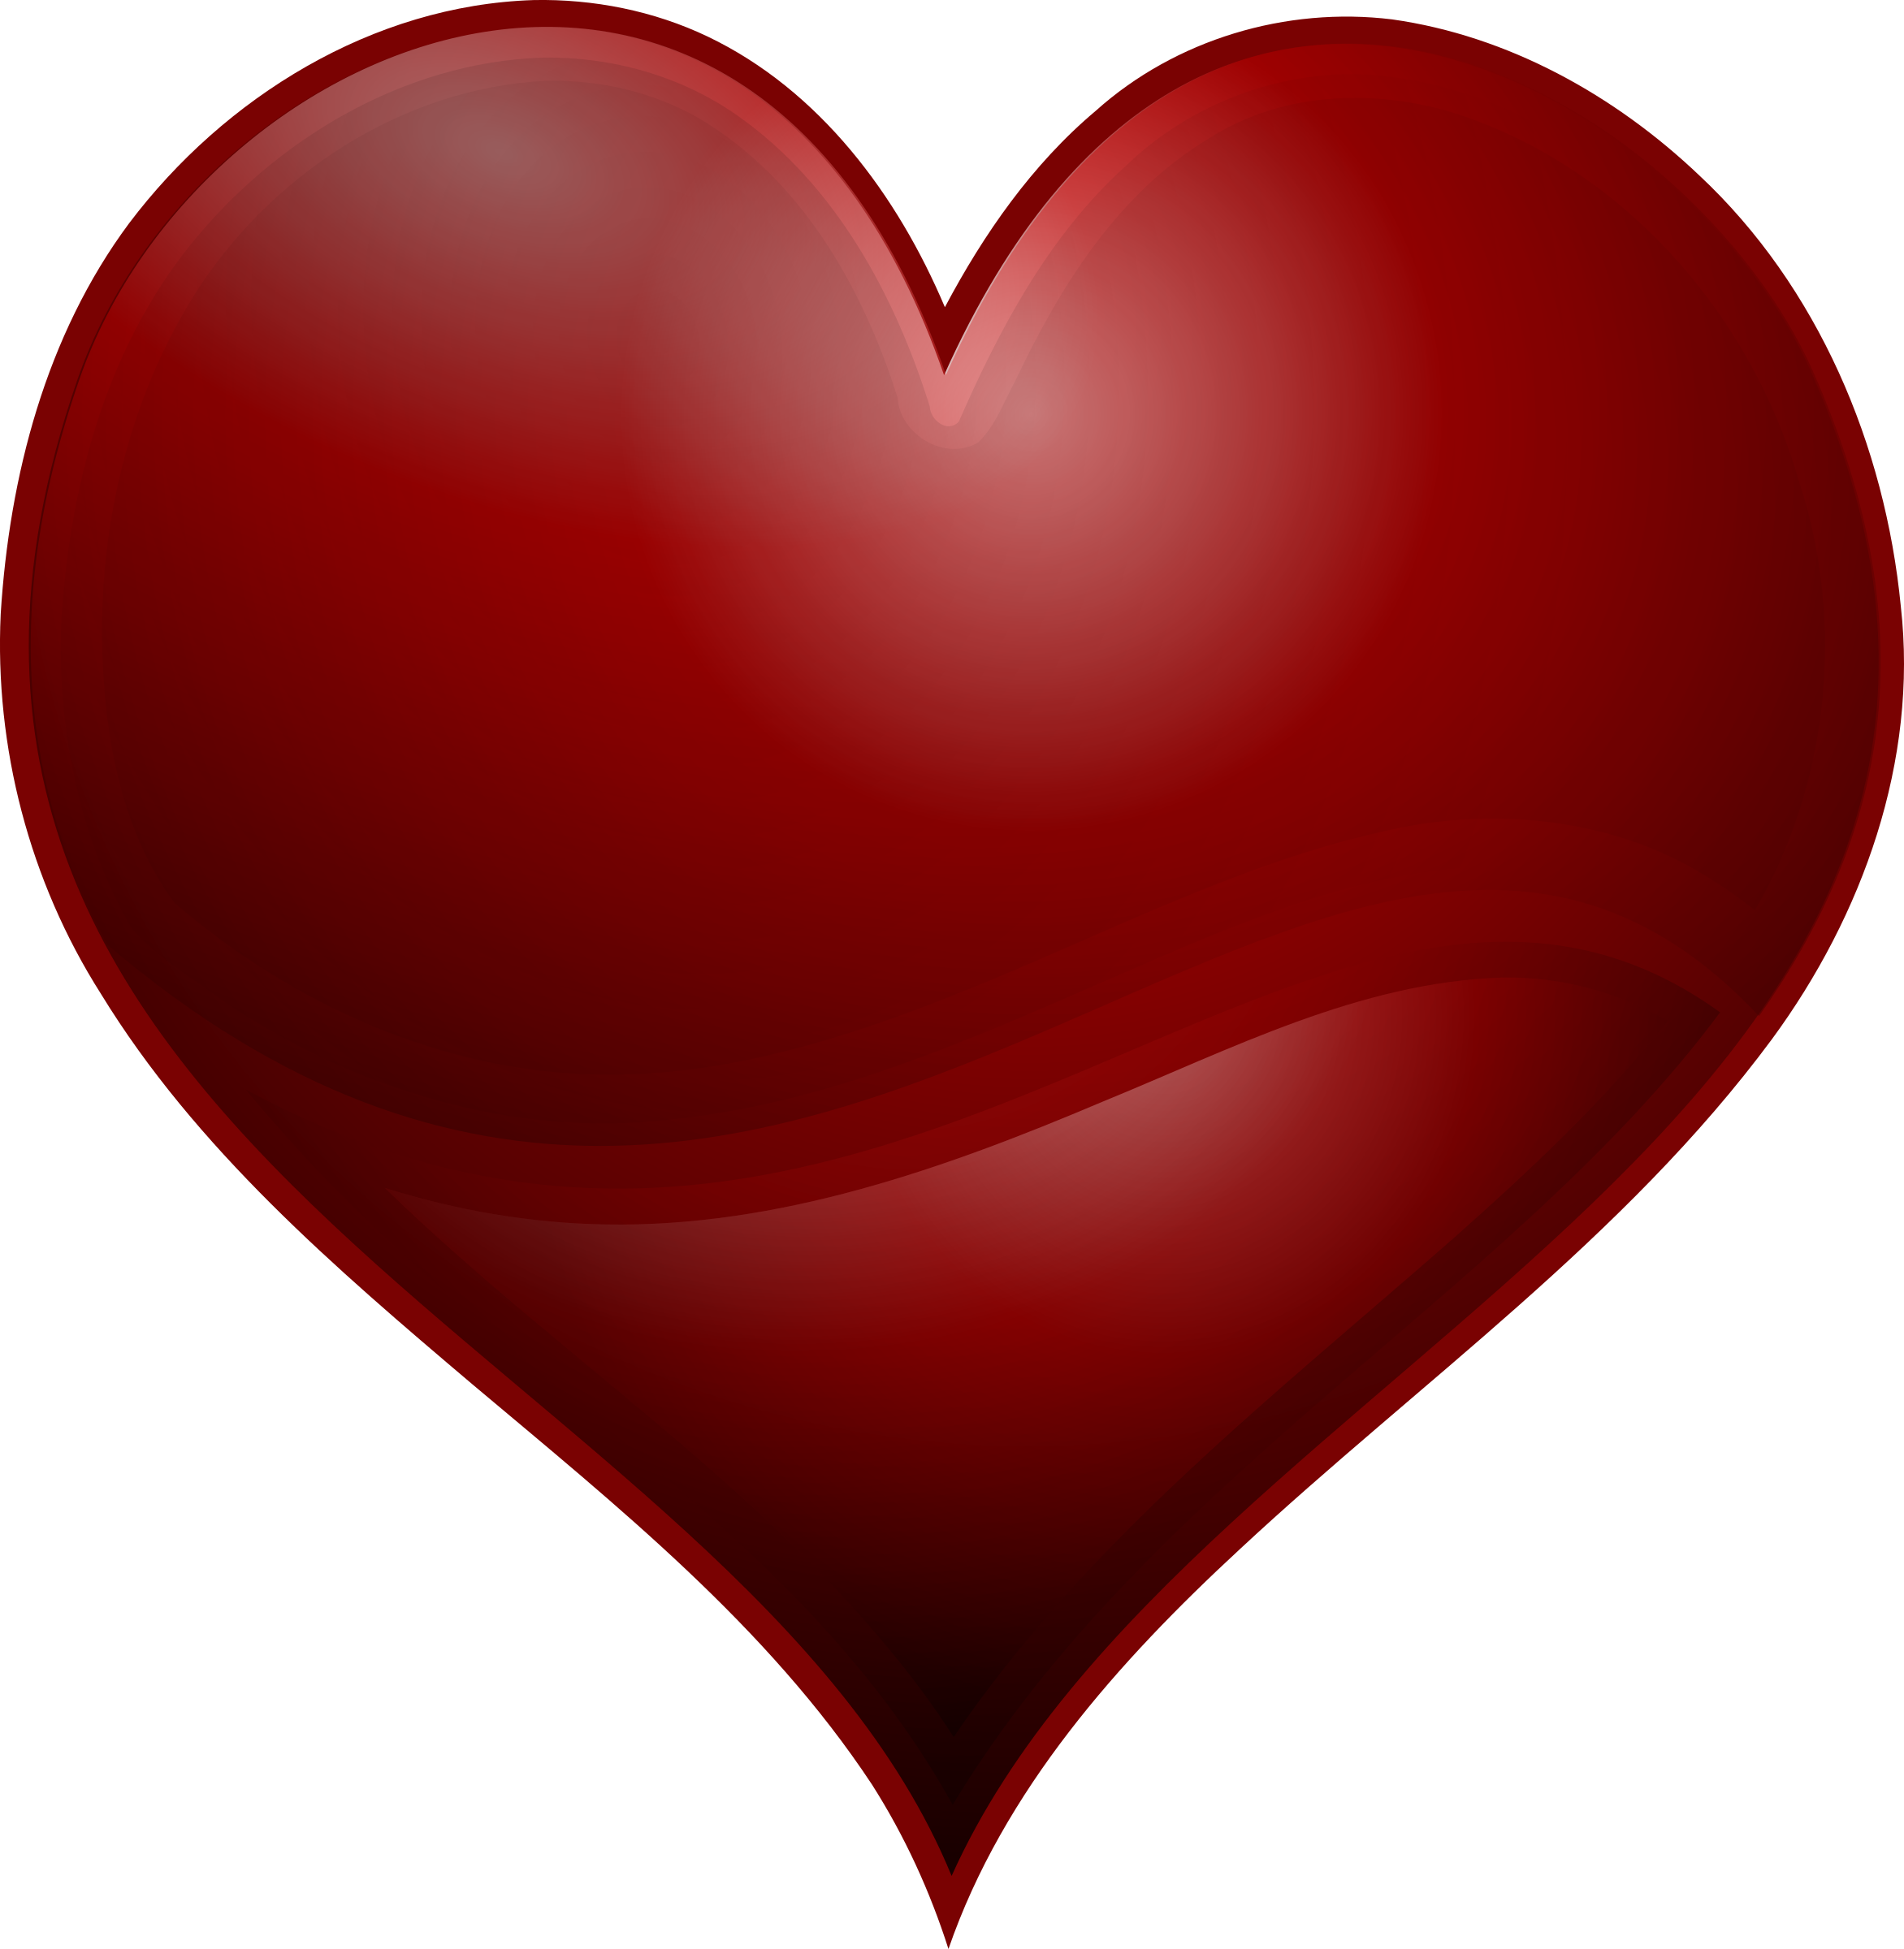 Free To Use Public Domain Hearts Clip Art - Red Heart Clip Art Free (2344x2400)